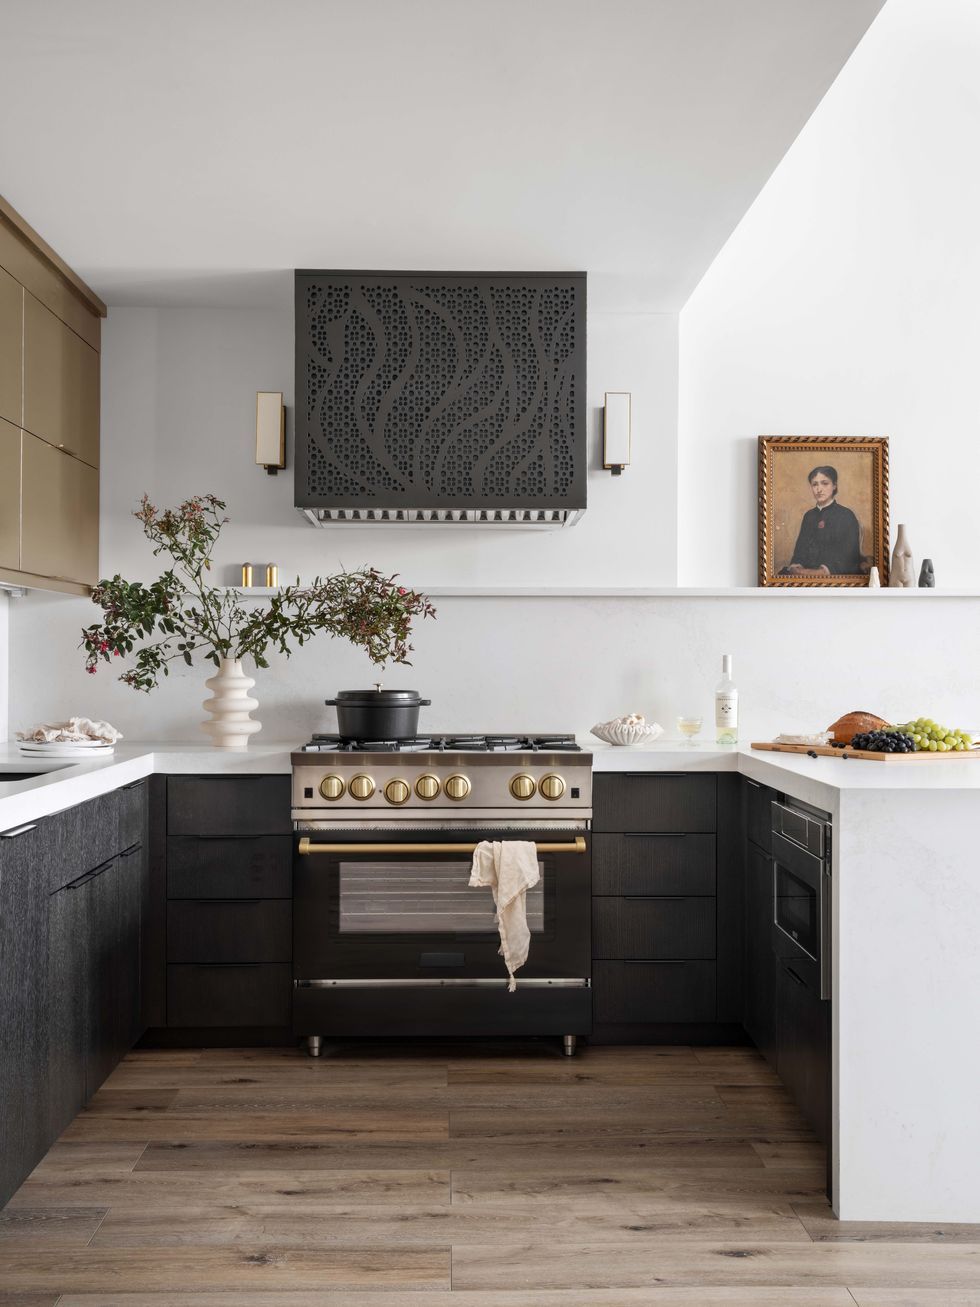 95 Kitchen Design Ideas - Remodeling Ideas For Interior Design